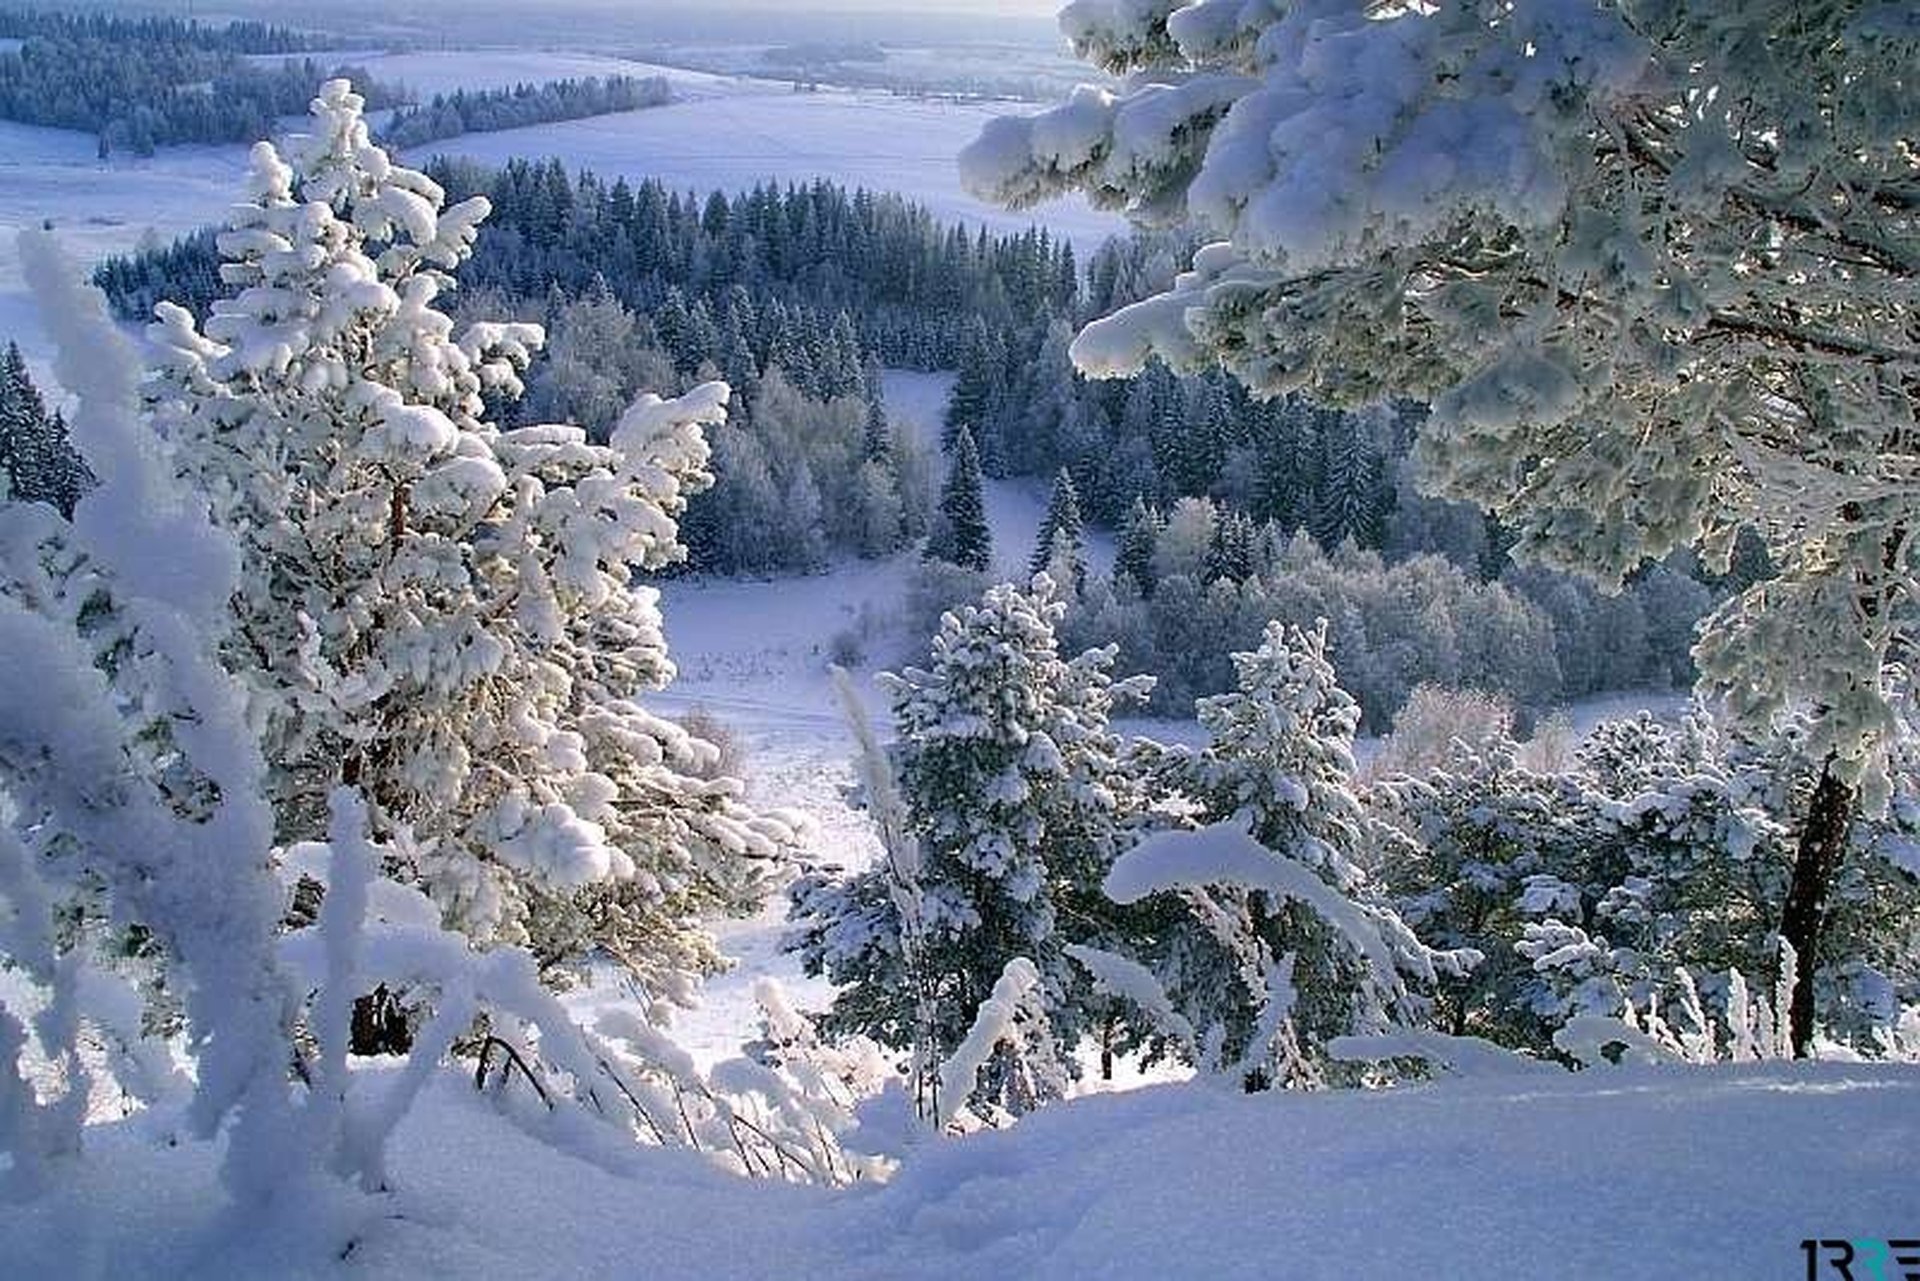 Родной край зимой. Баргузинский заповедник зима. Баргузинский заповедник зимой. Зимний лес. Природа Урала зимой.